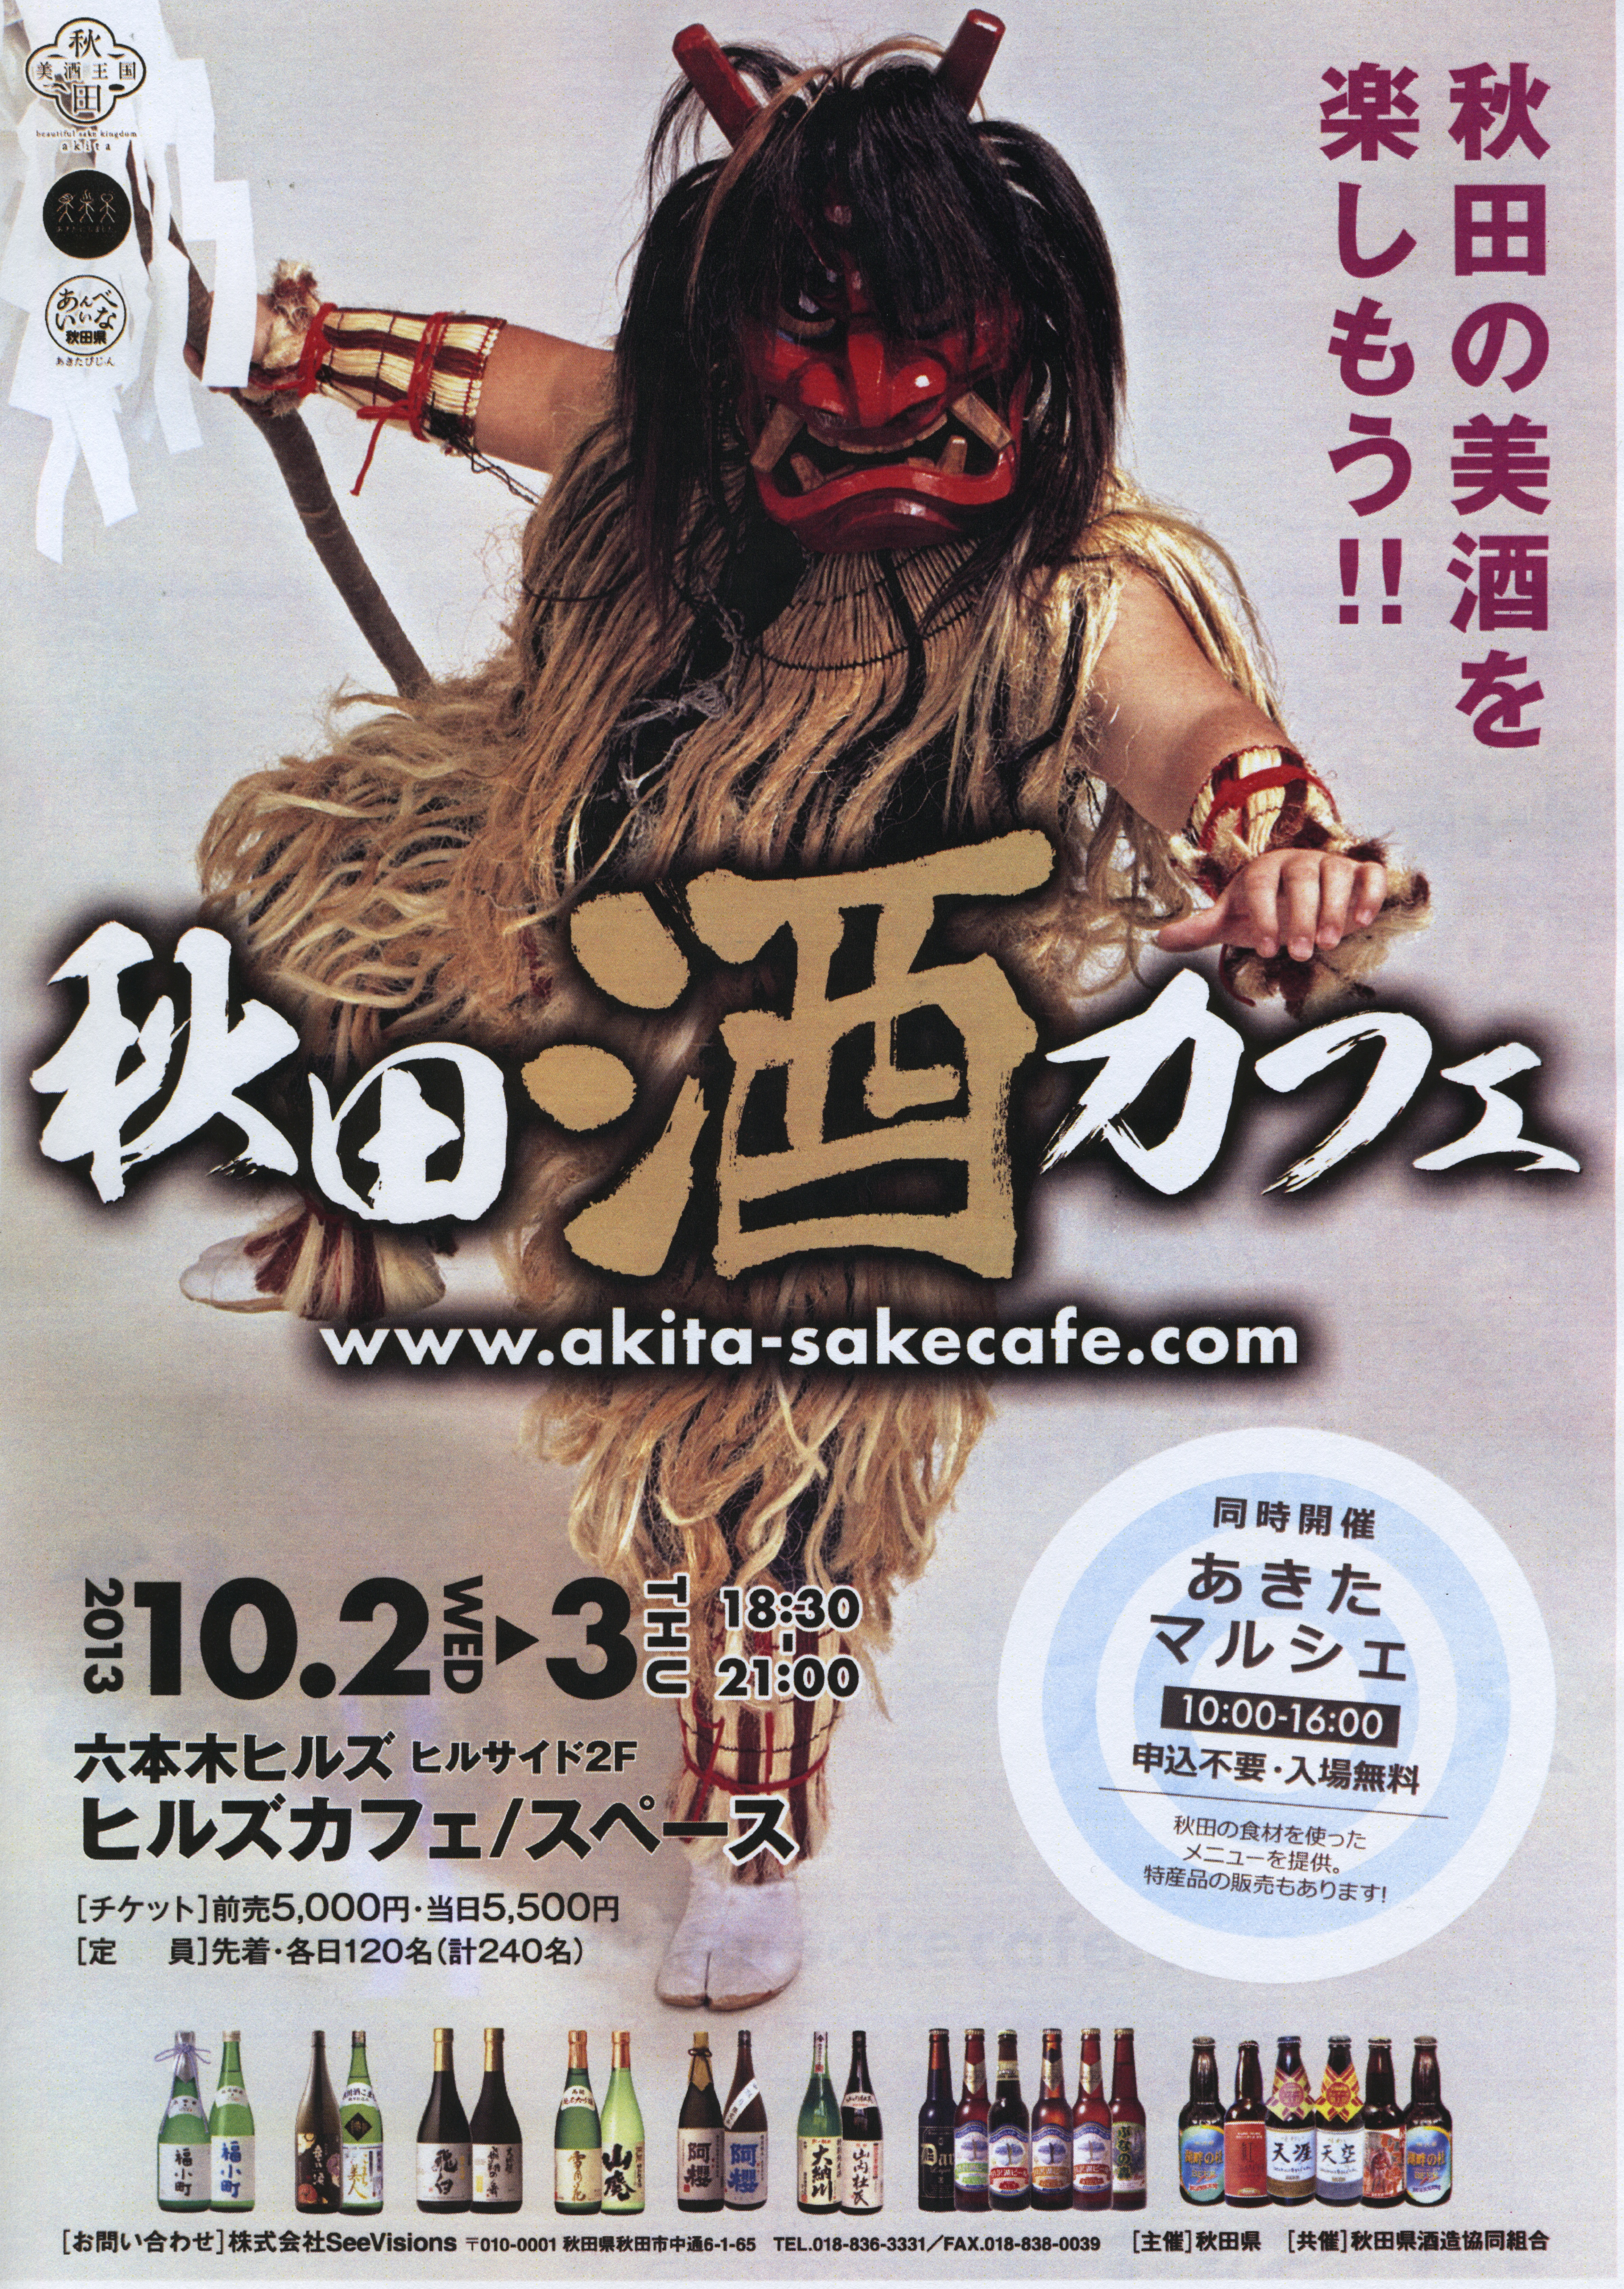 http://www.fukukomachi.com/blog/photo/sakecafe.jpeg